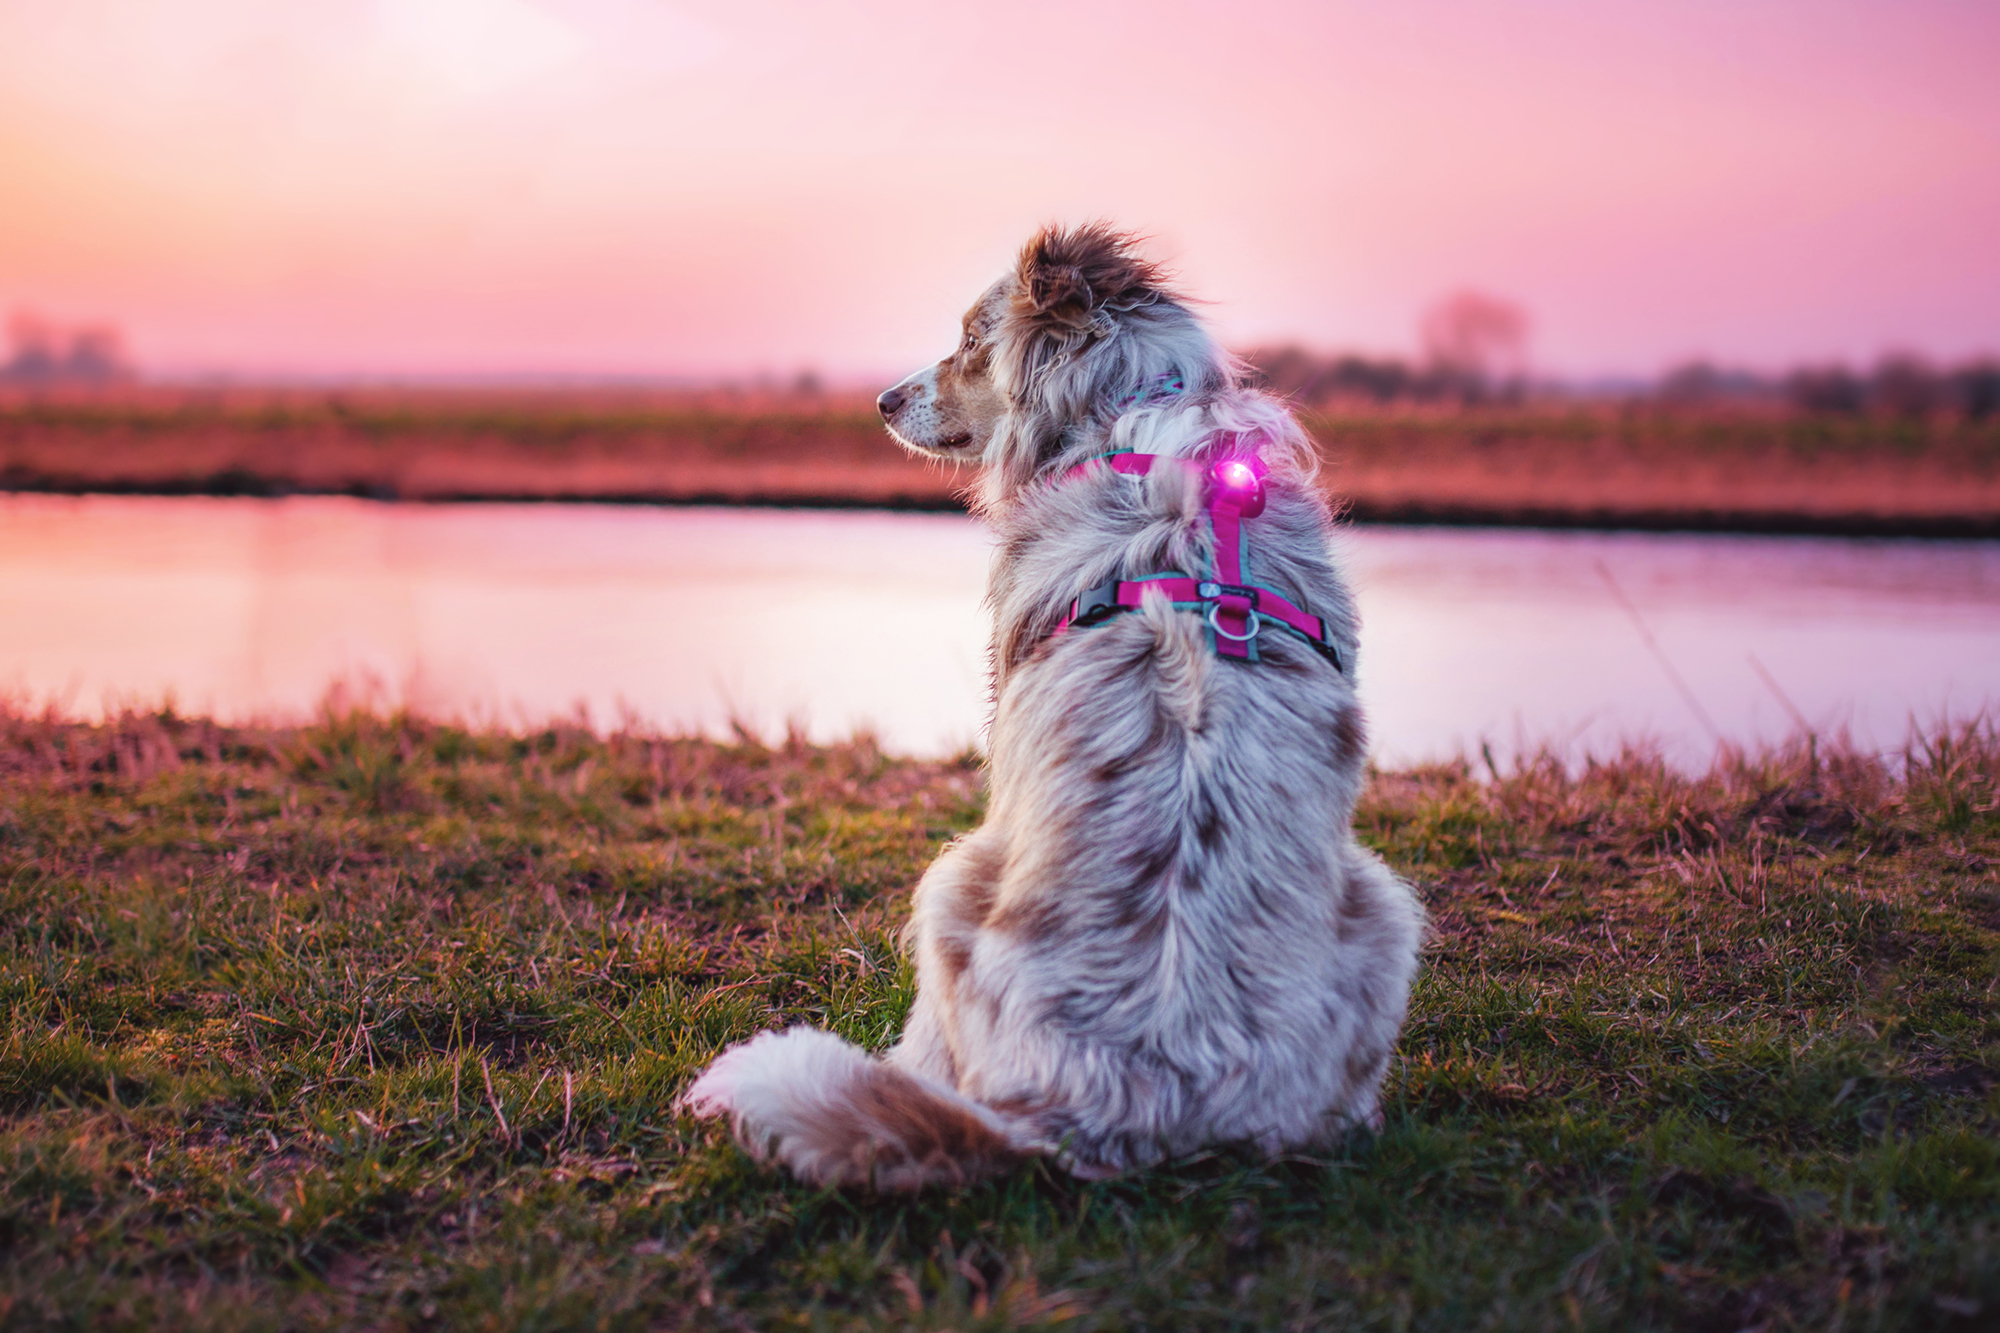 Orbiloc verlichting veiligheidslampje LED lichtje oplaadbaar hond lichtgevende halsband hondentuig donker action